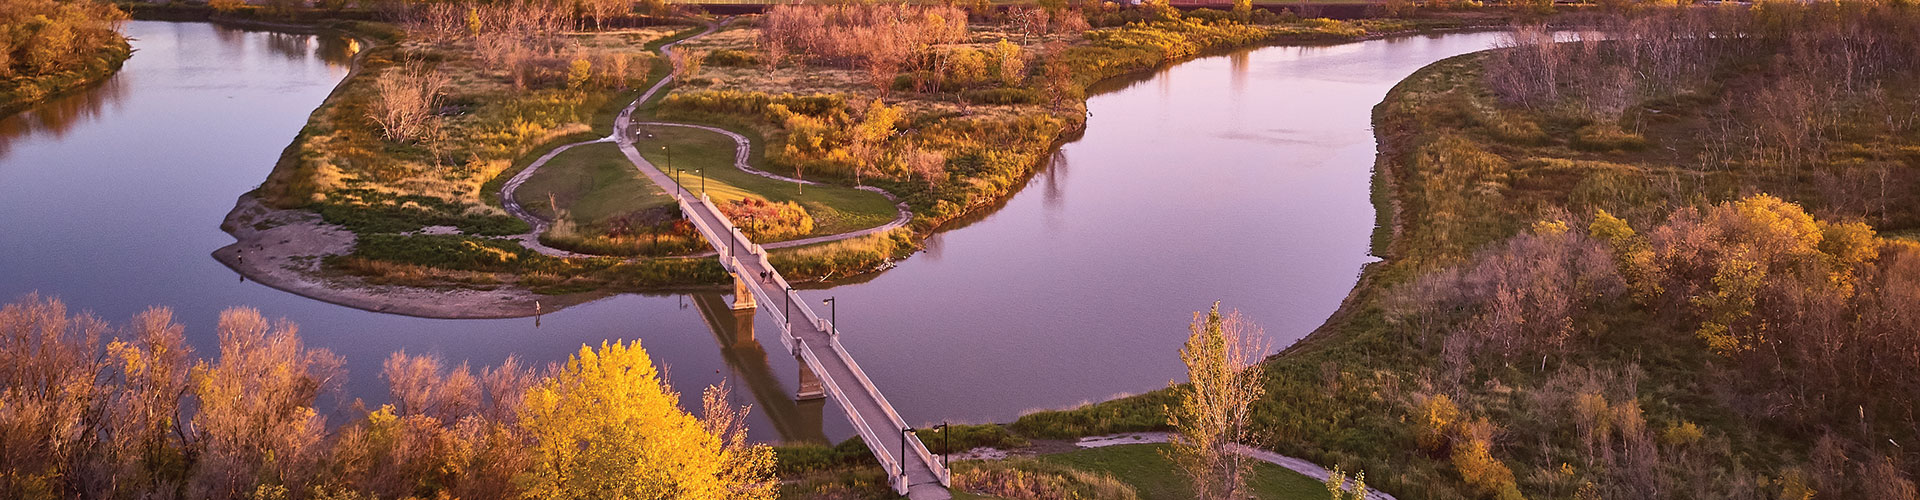 The Red Willow Pedestrian Bridge spans the Assiniboine River in Brandon, Manitoba